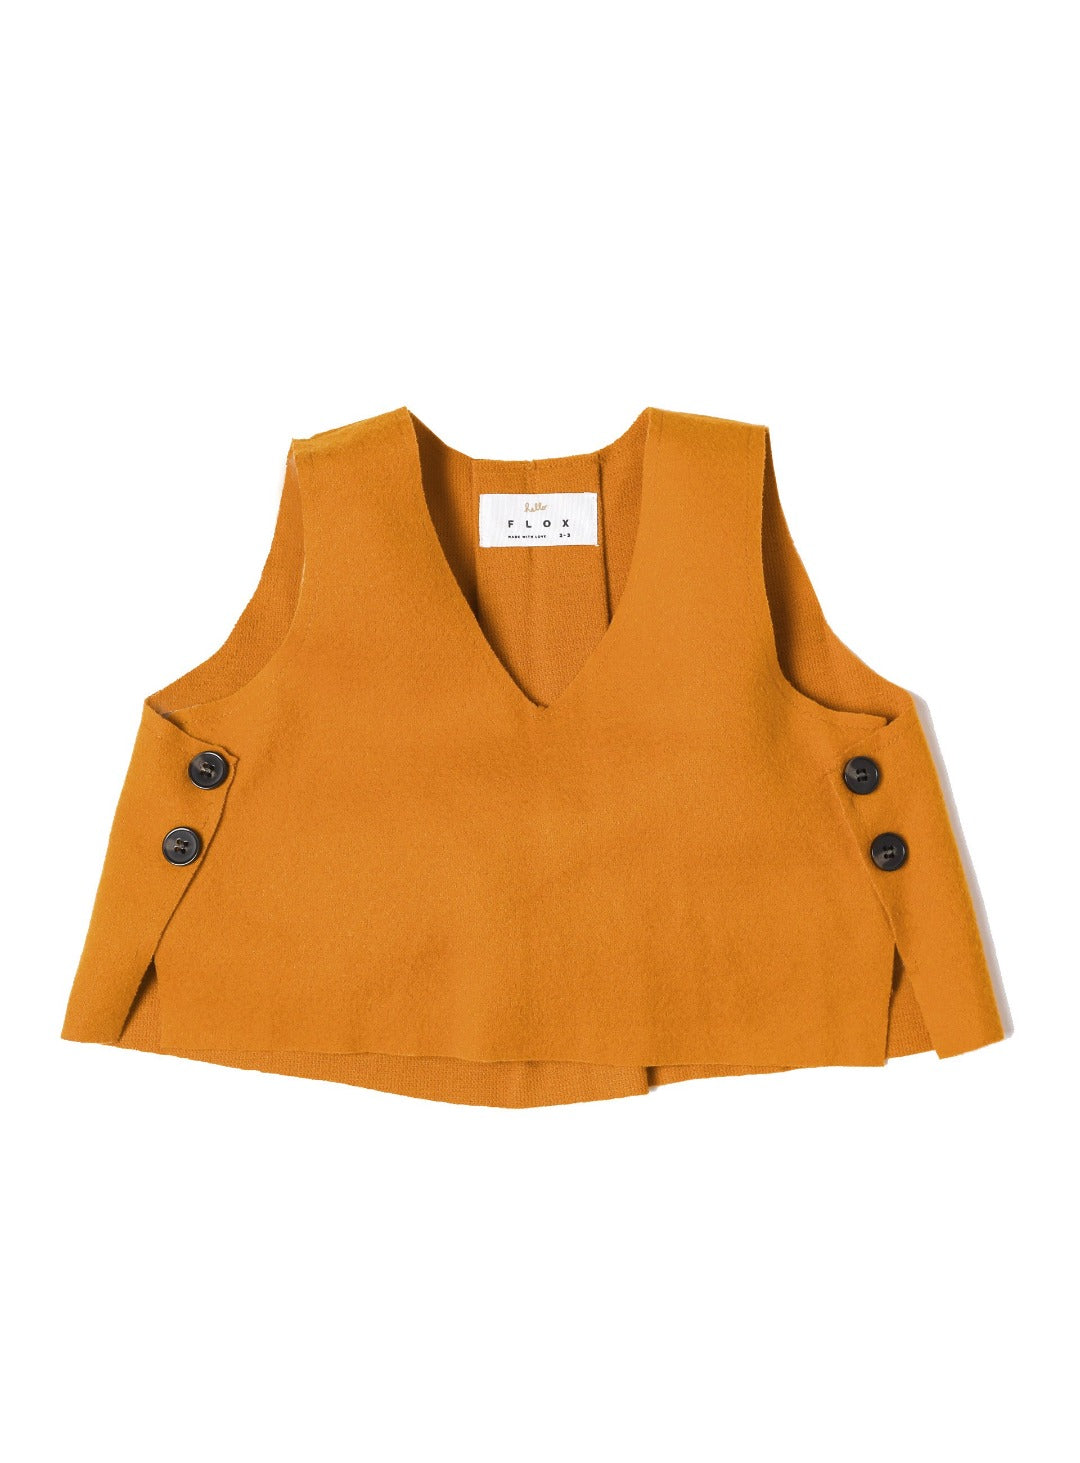 loose cut marmalade orange vest